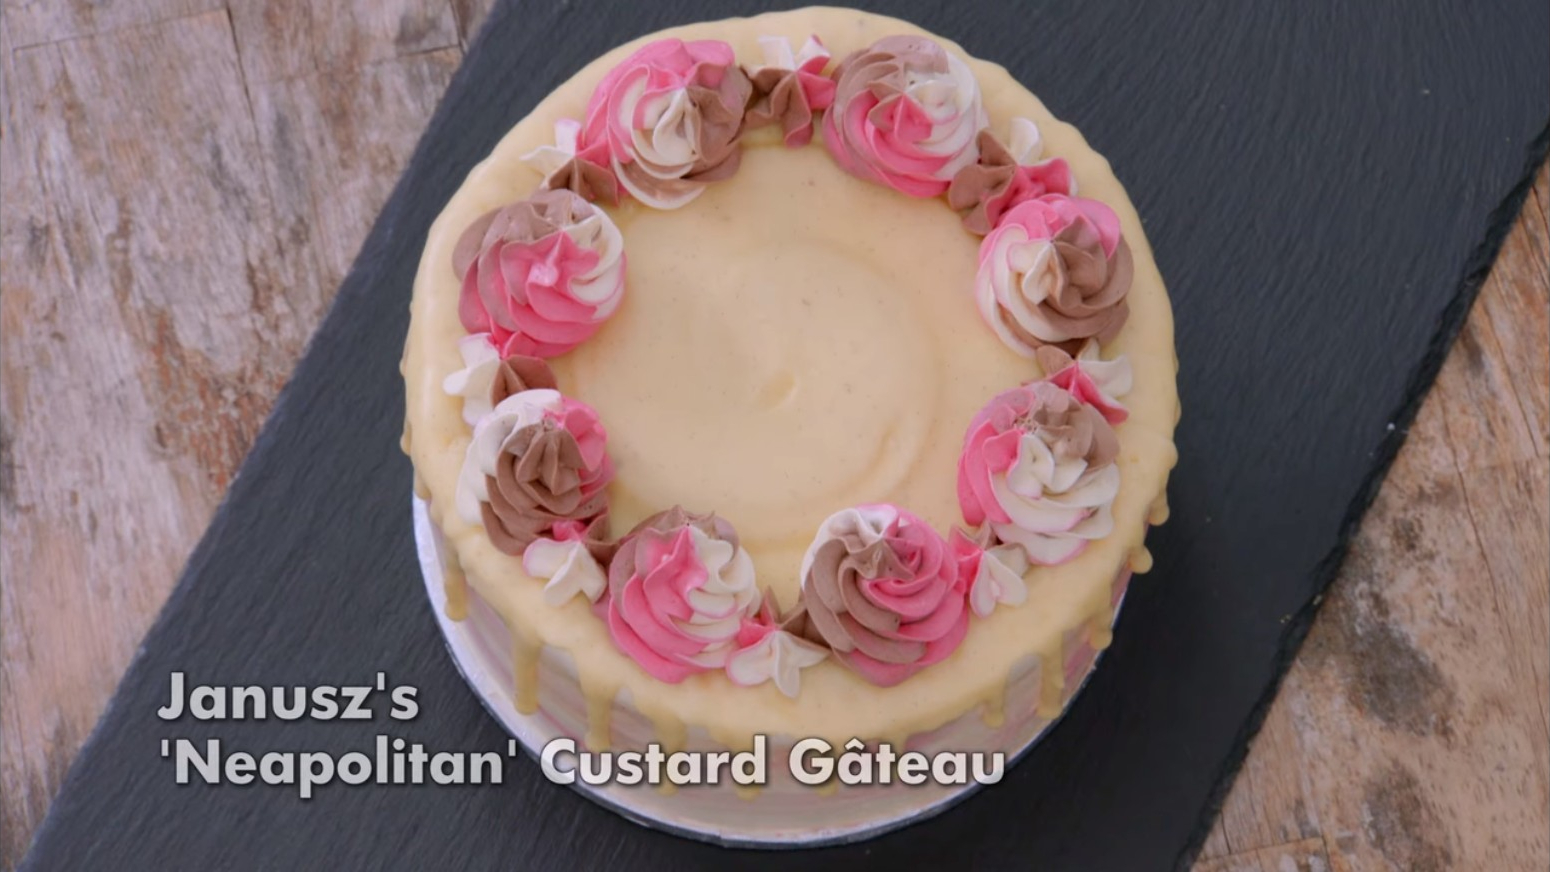 Picture shows: Janusz's Neapolitan Custard Gateau Showstopper from The Great British Baking Show's Custard Week